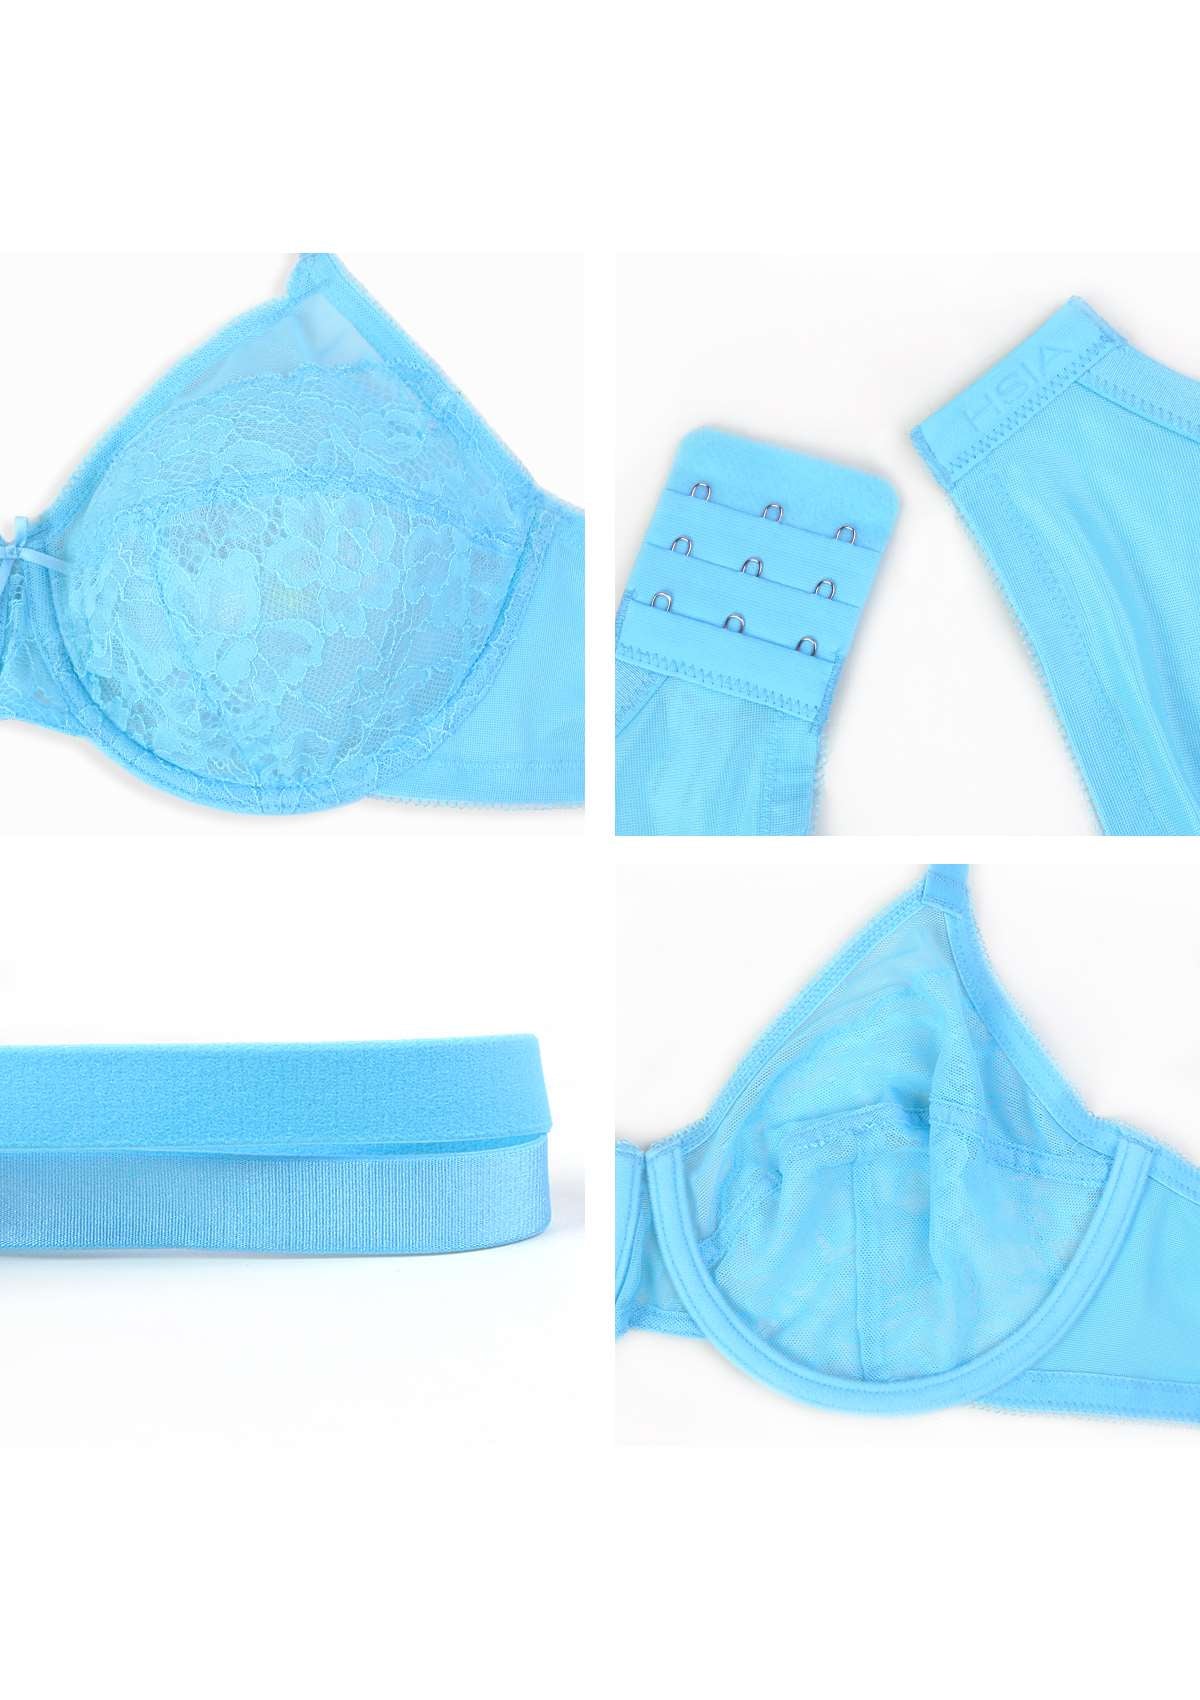 HSIA Enchante Minimizer Lace Bra: Full Support For Heavy Breasts - Capri Blue / 46 / C